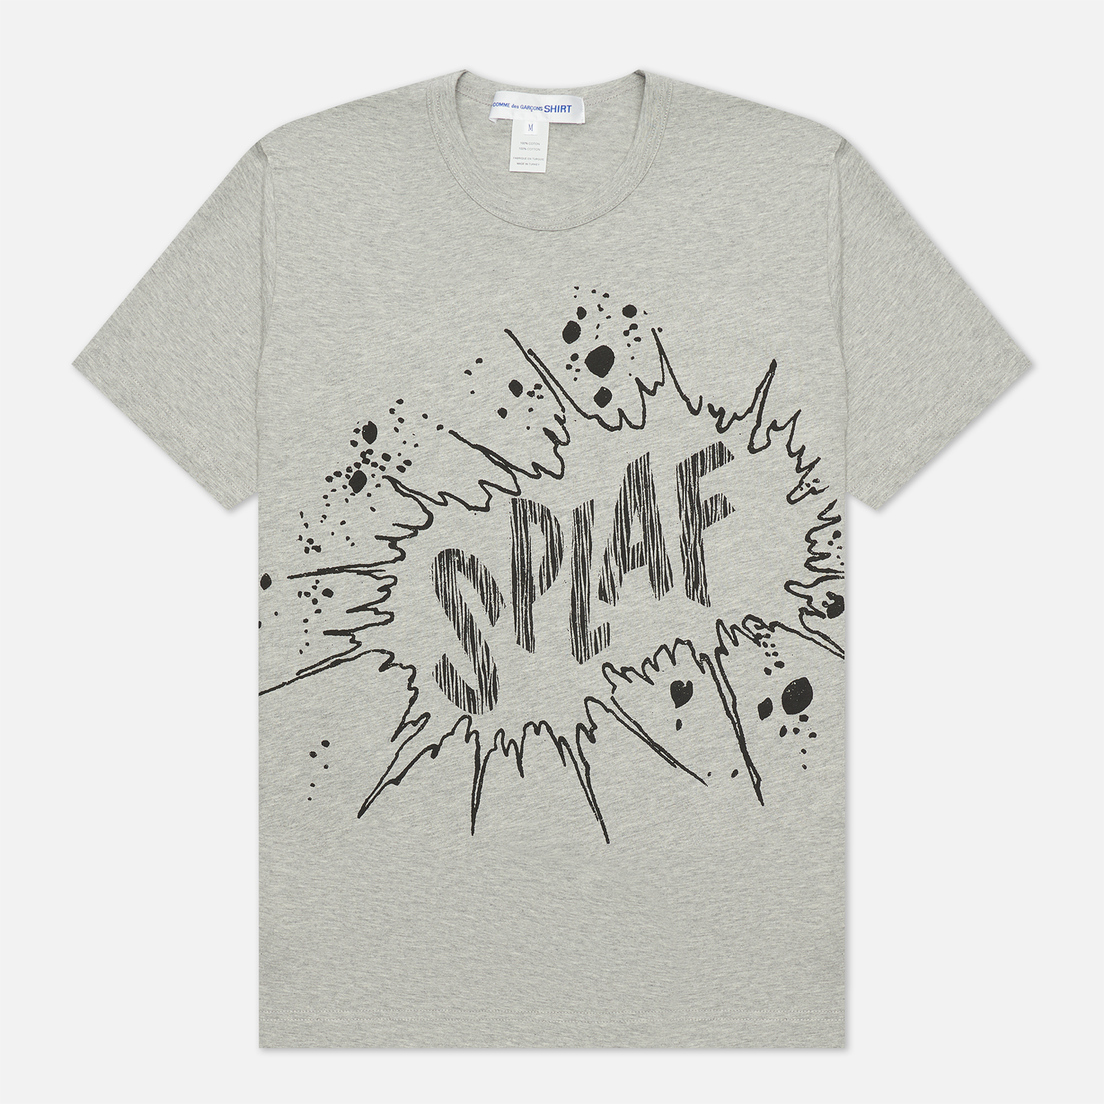 Comme des Garcons SHIRT Мужская футболка x Christian Marclay Print Splaf Crew Neck